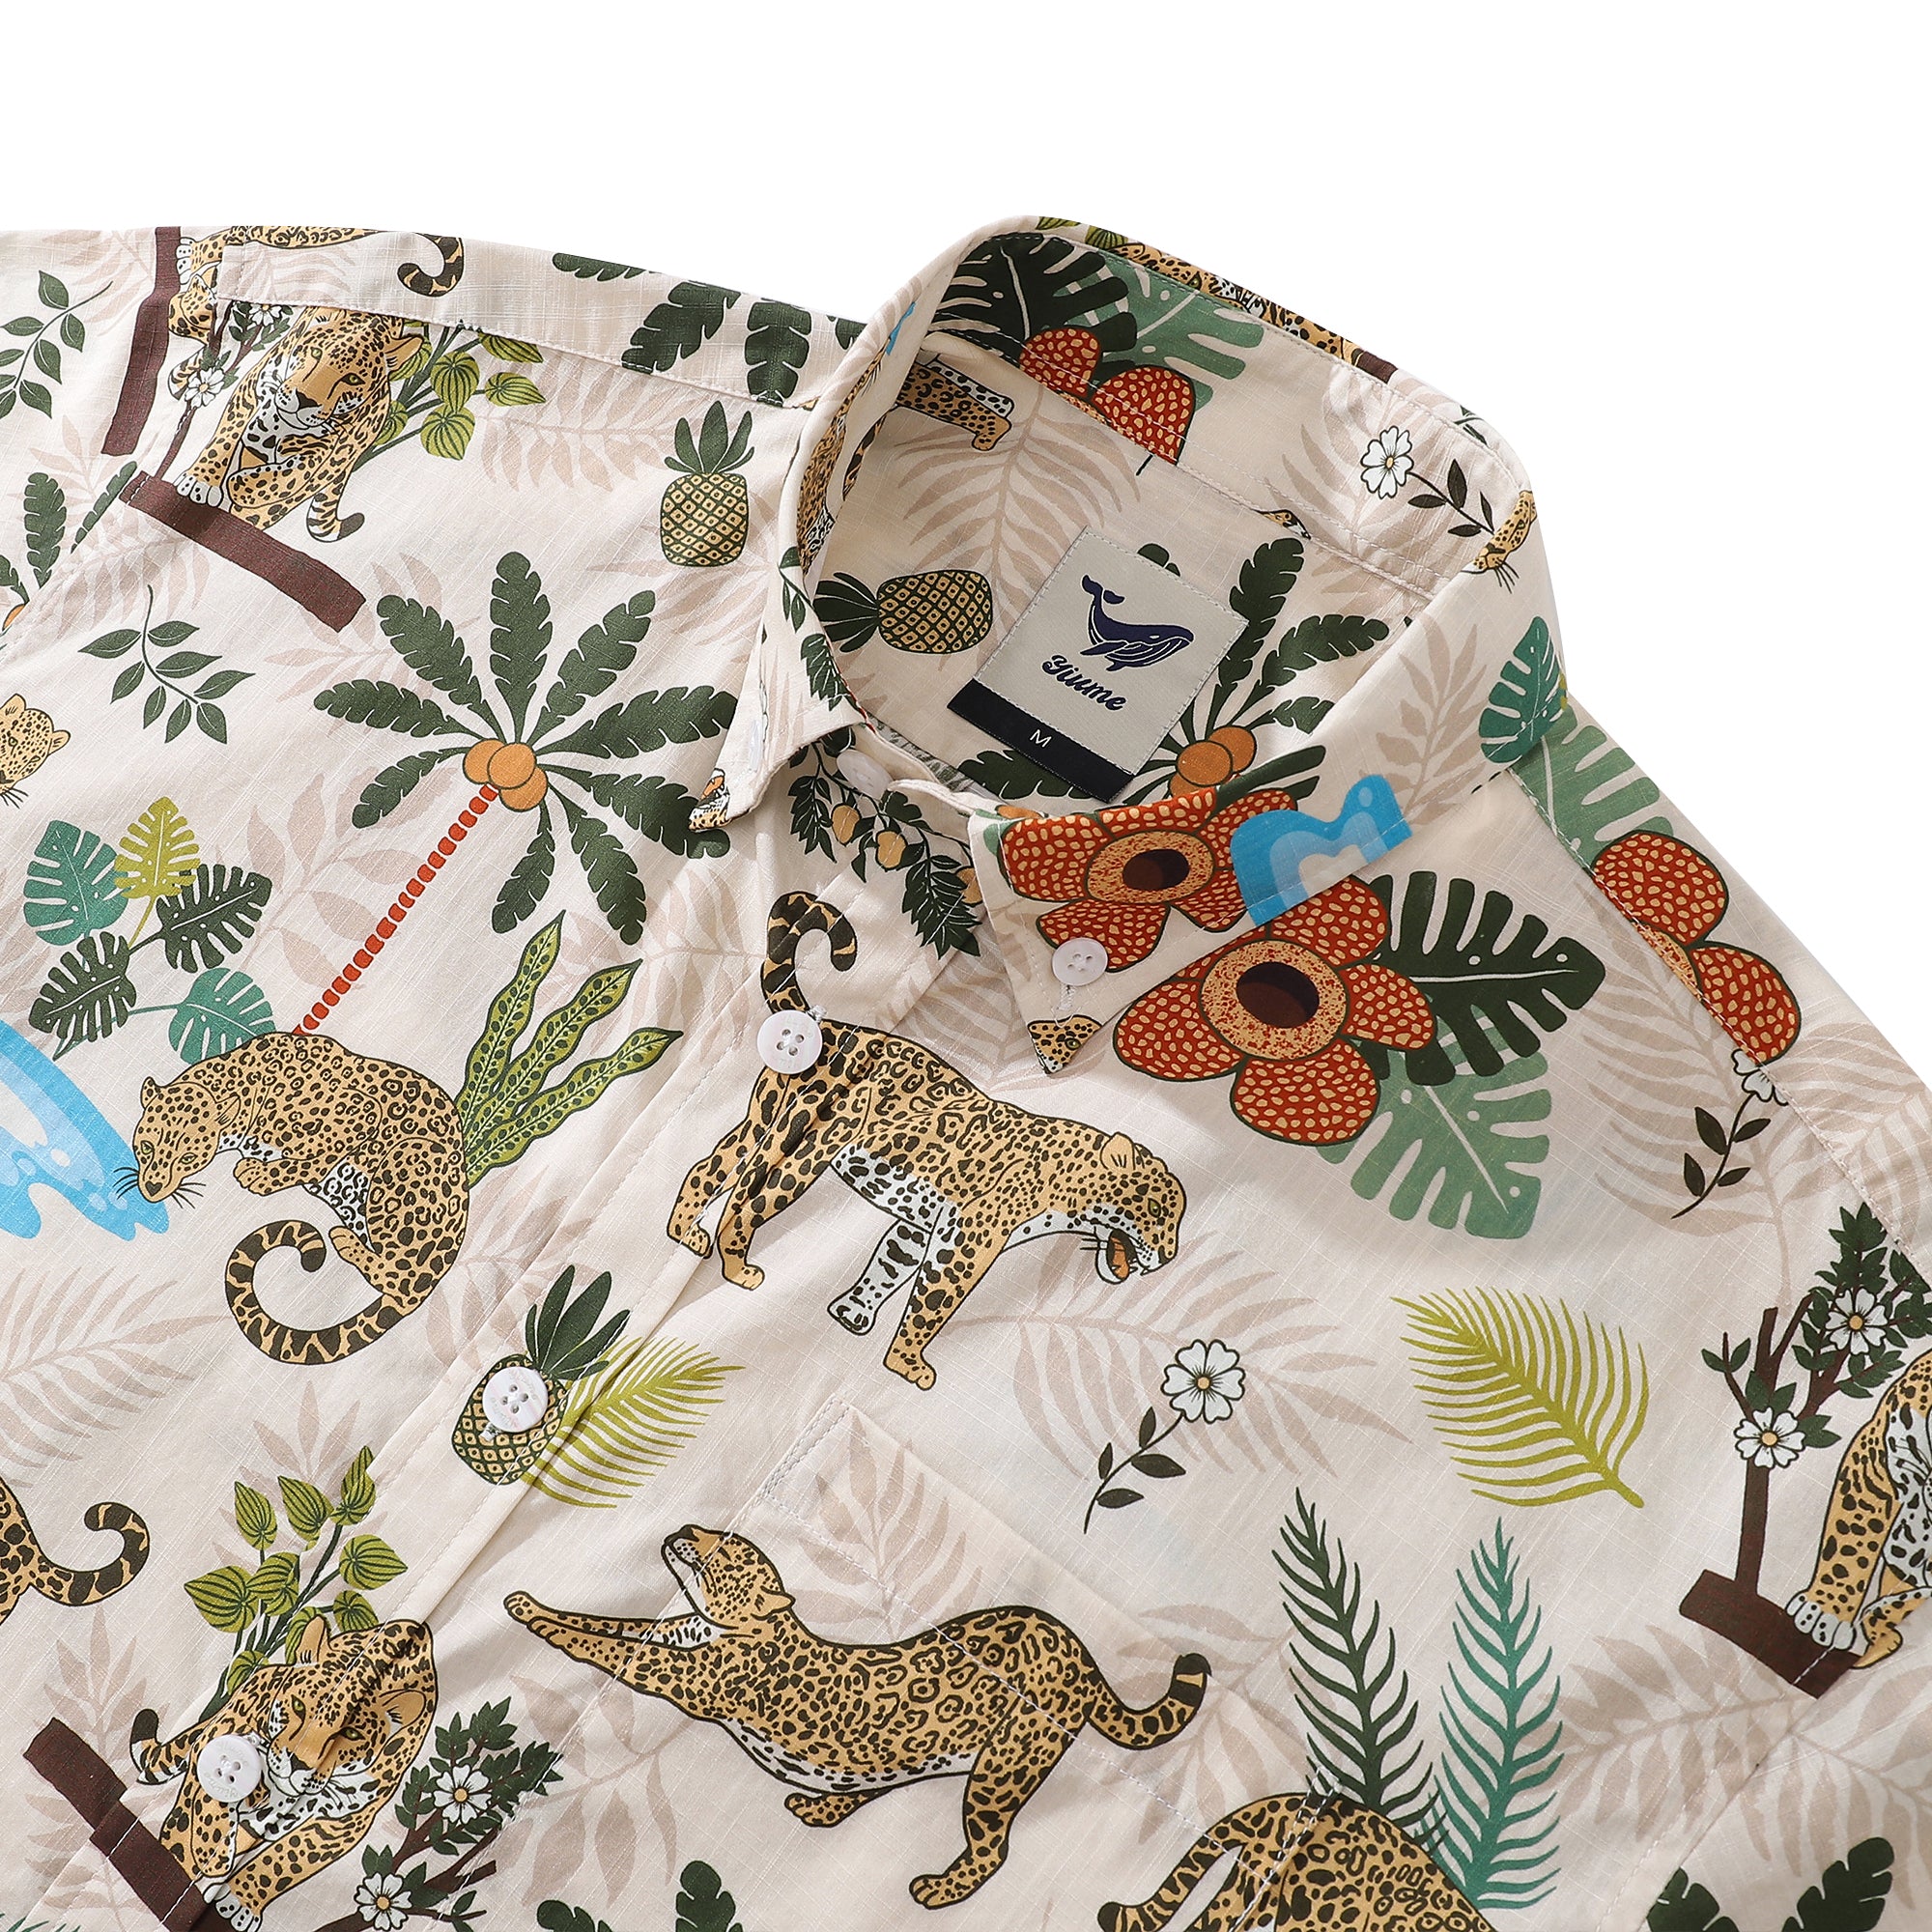 Funky Hawaiian Shirt For Men Adventure of the Jaguar Print Button Down Shirt